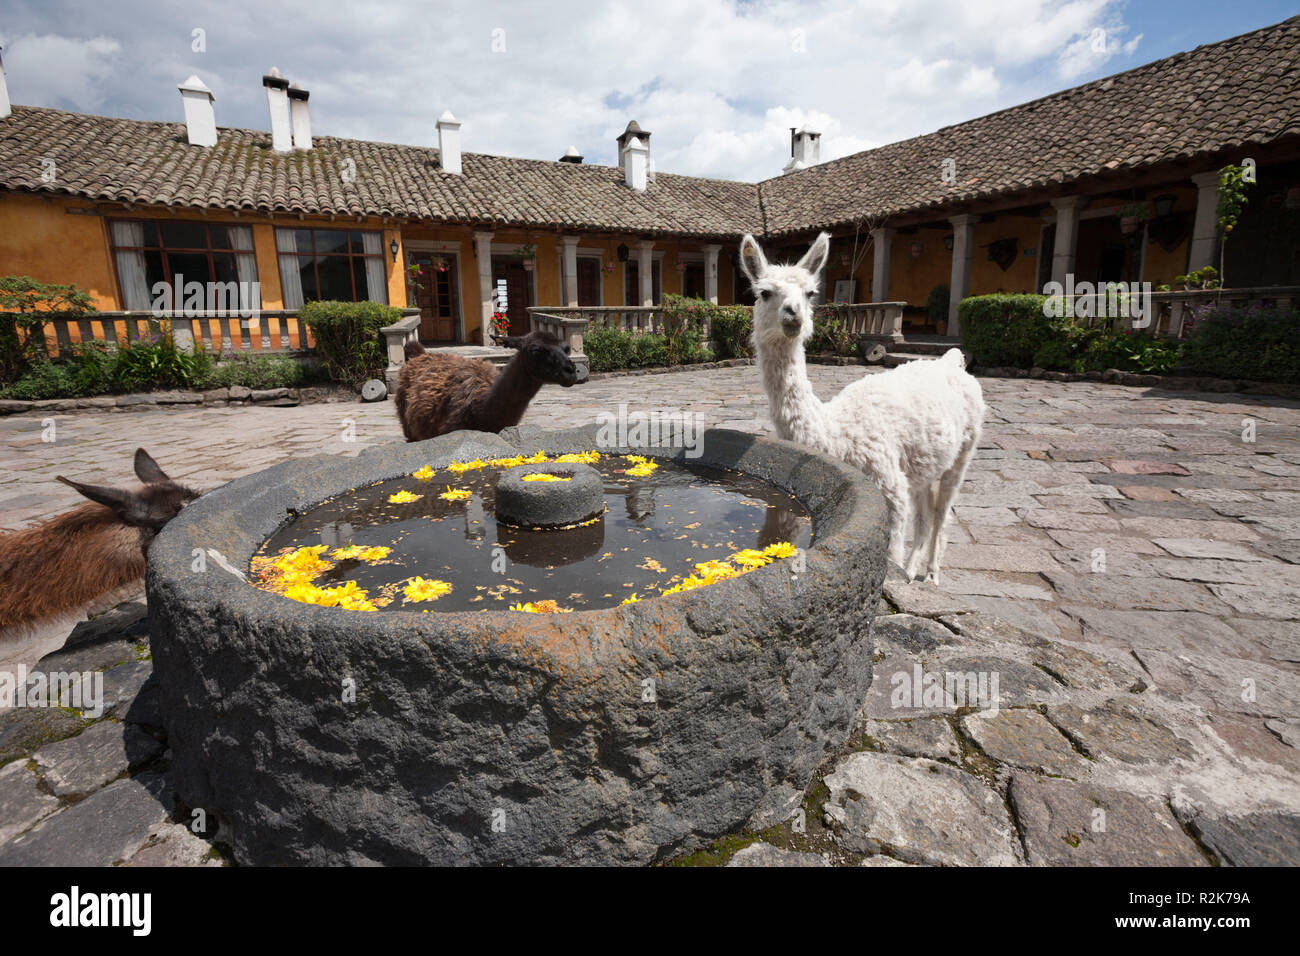 Lamas at Hacienda San Augustin de Callo, Lama glama, Cotopaxi National Park, Galapagos, Ecuador Stock Photo